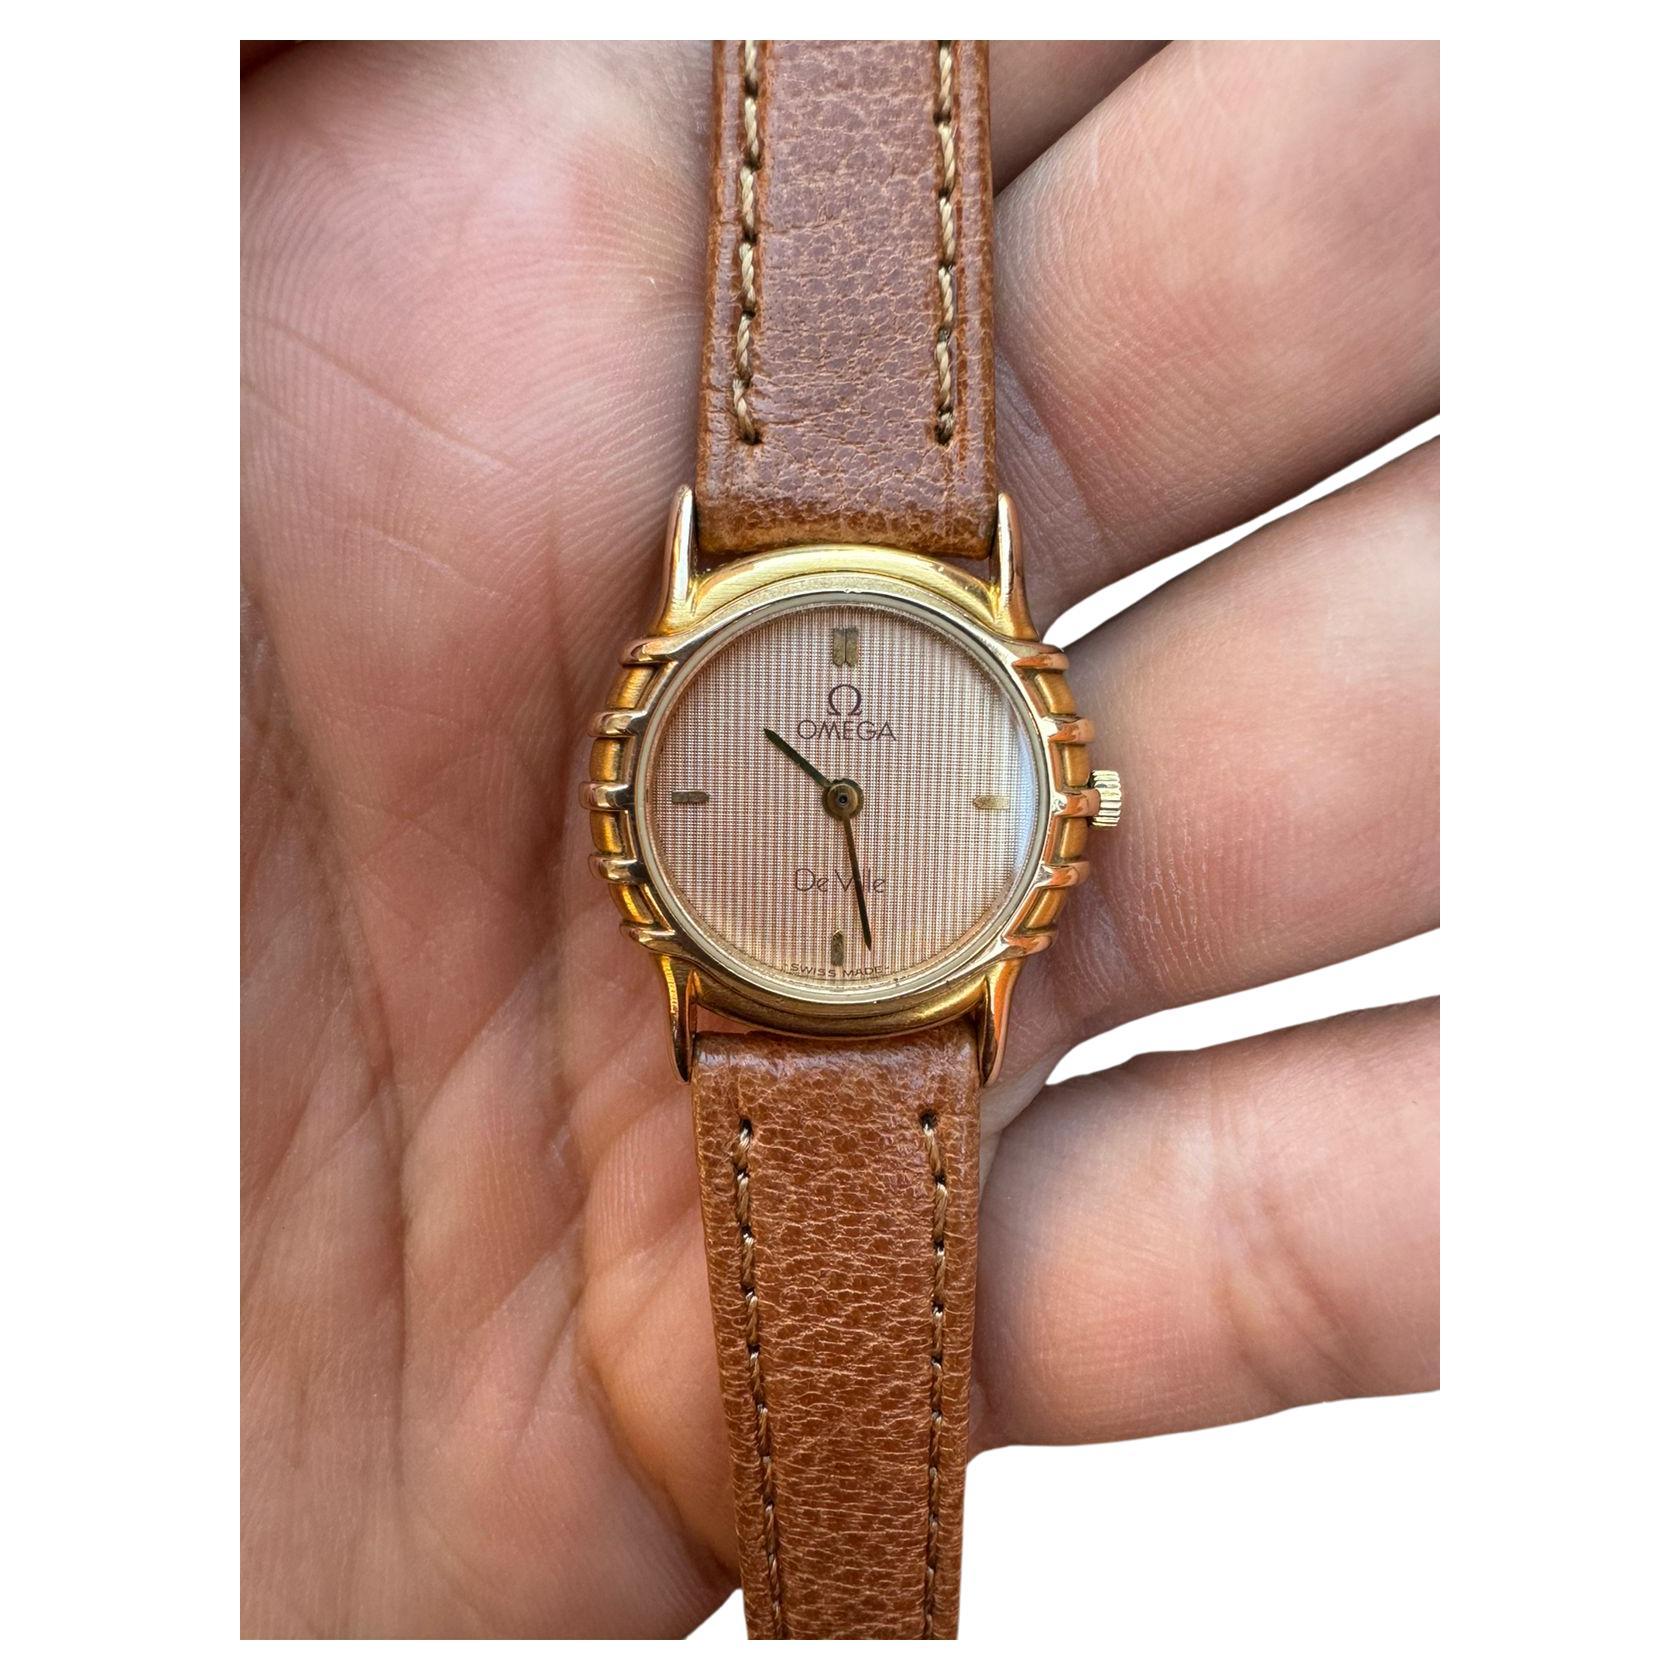 How do I take the back off a vintage Omega watch?